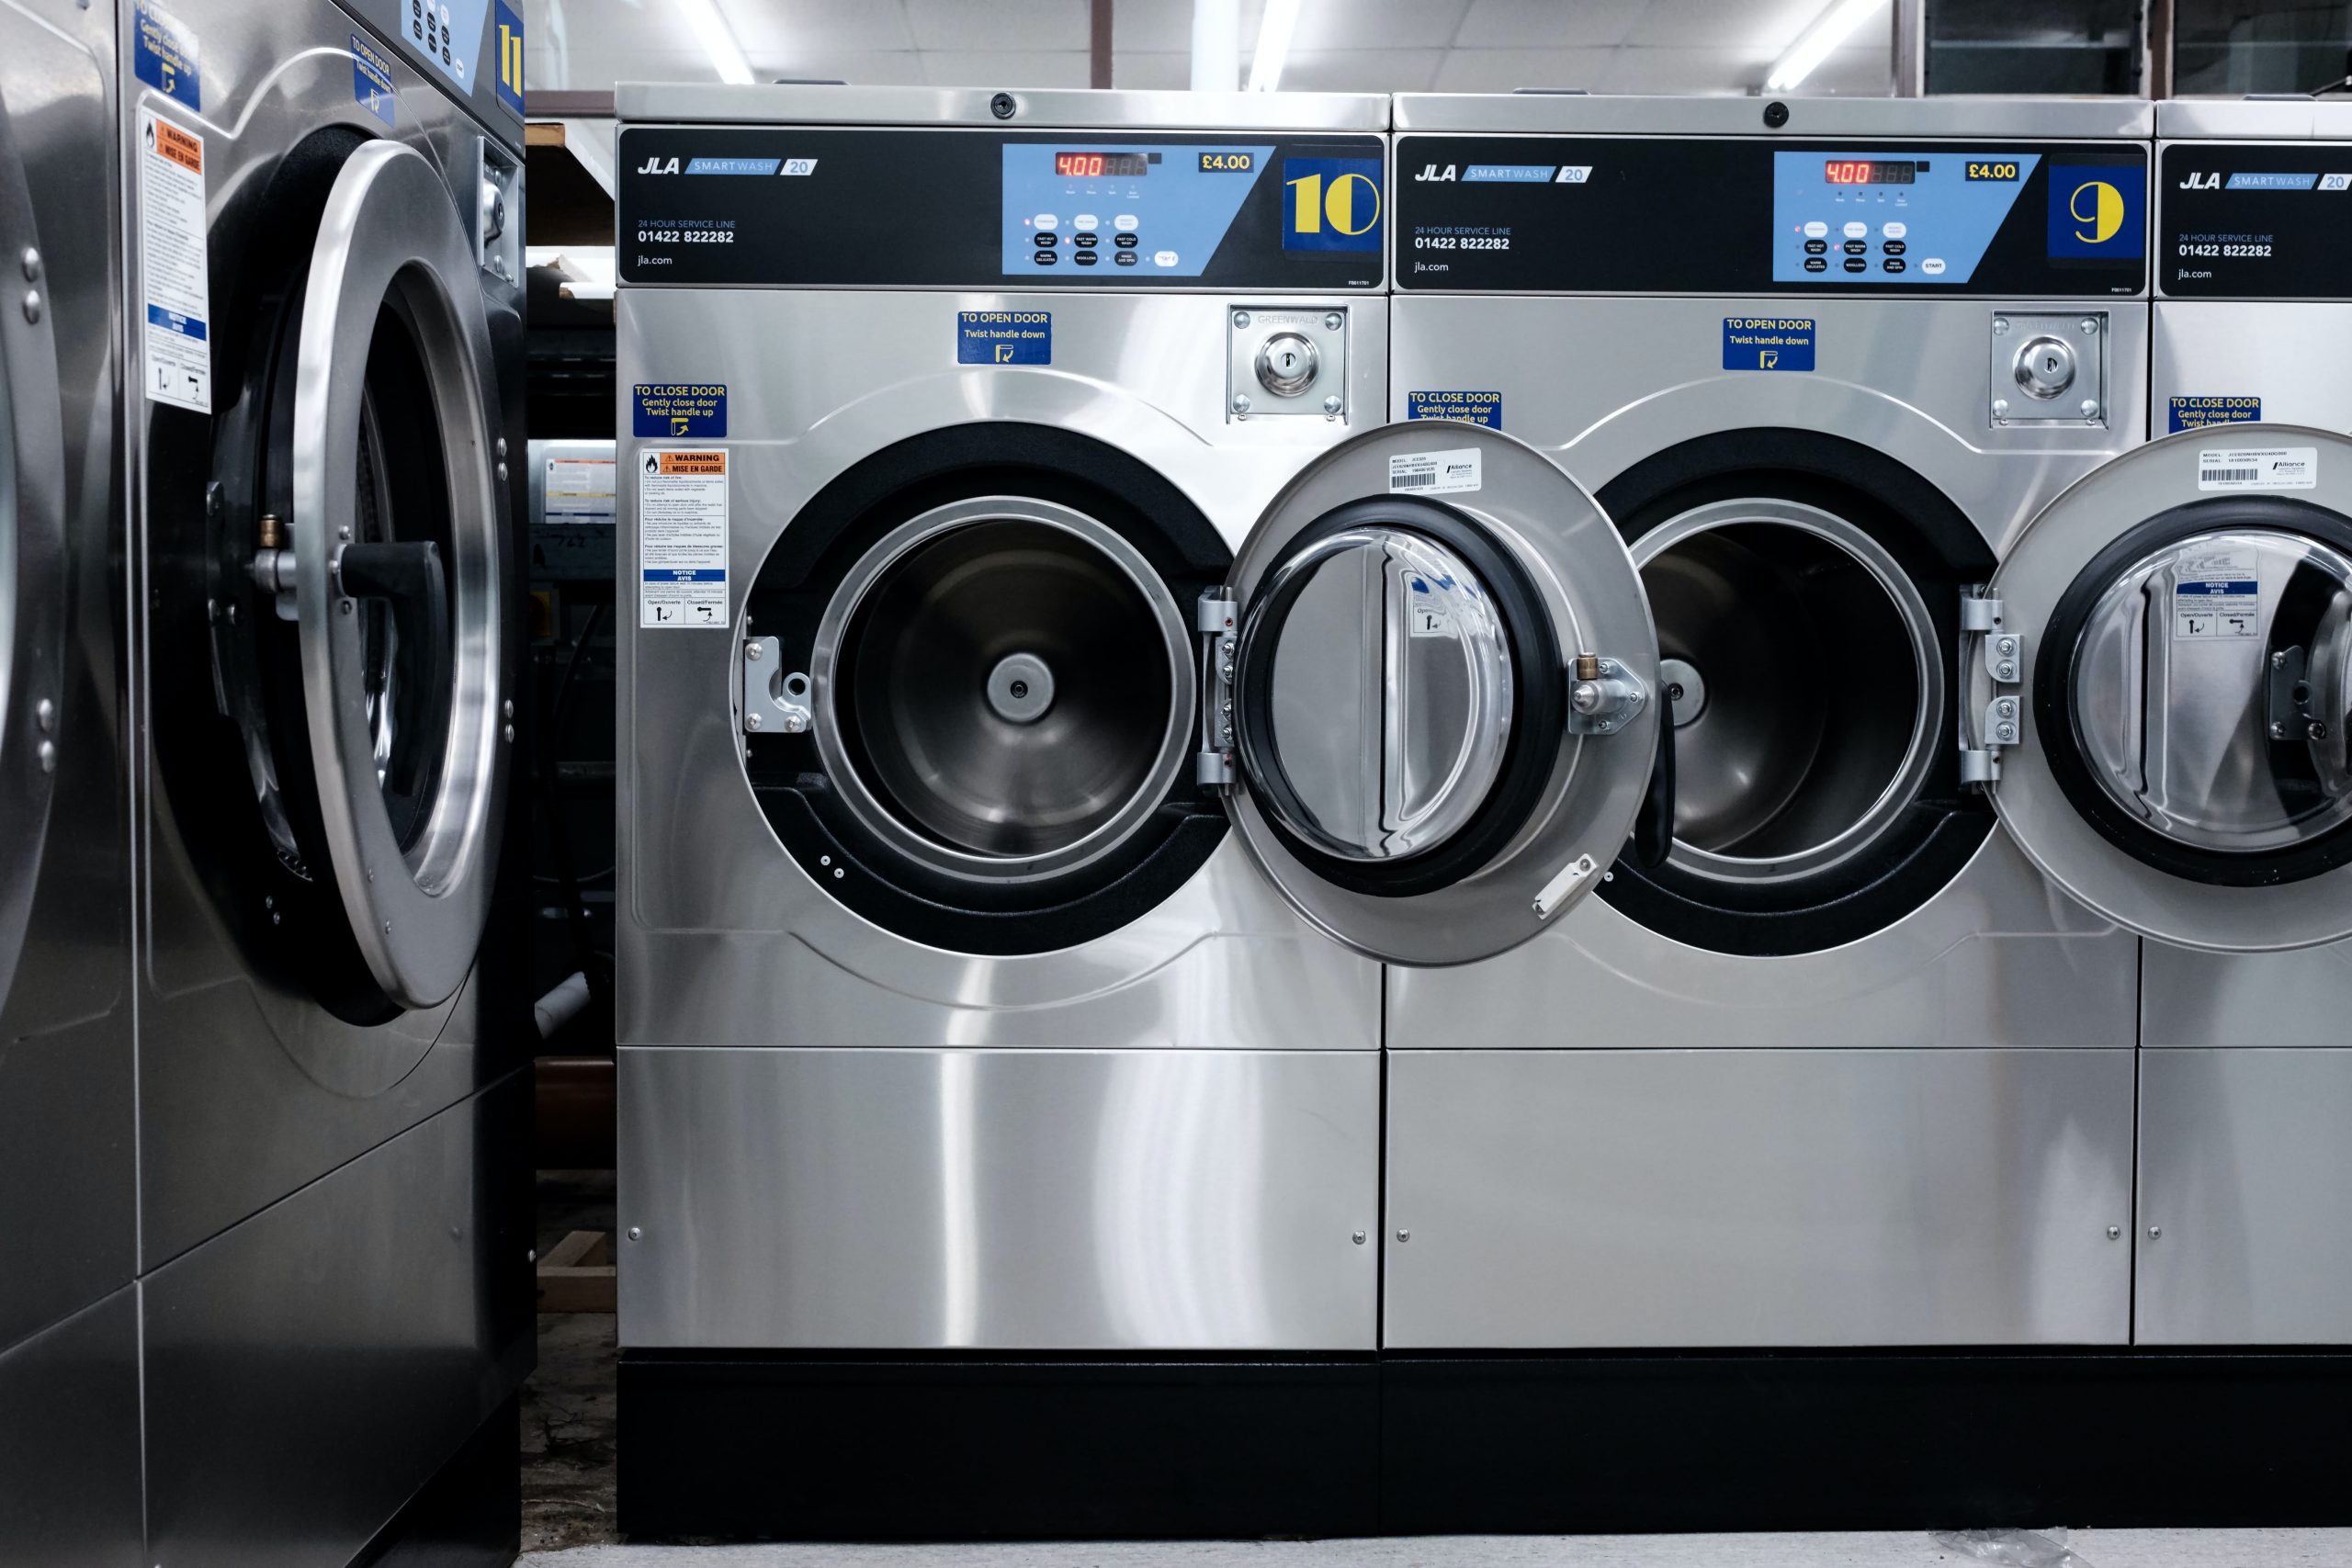 Cara Mencuci di Mesin Cuci Dengan Baik dan Benar manfaat mesin cuci fungsi mesin cuci